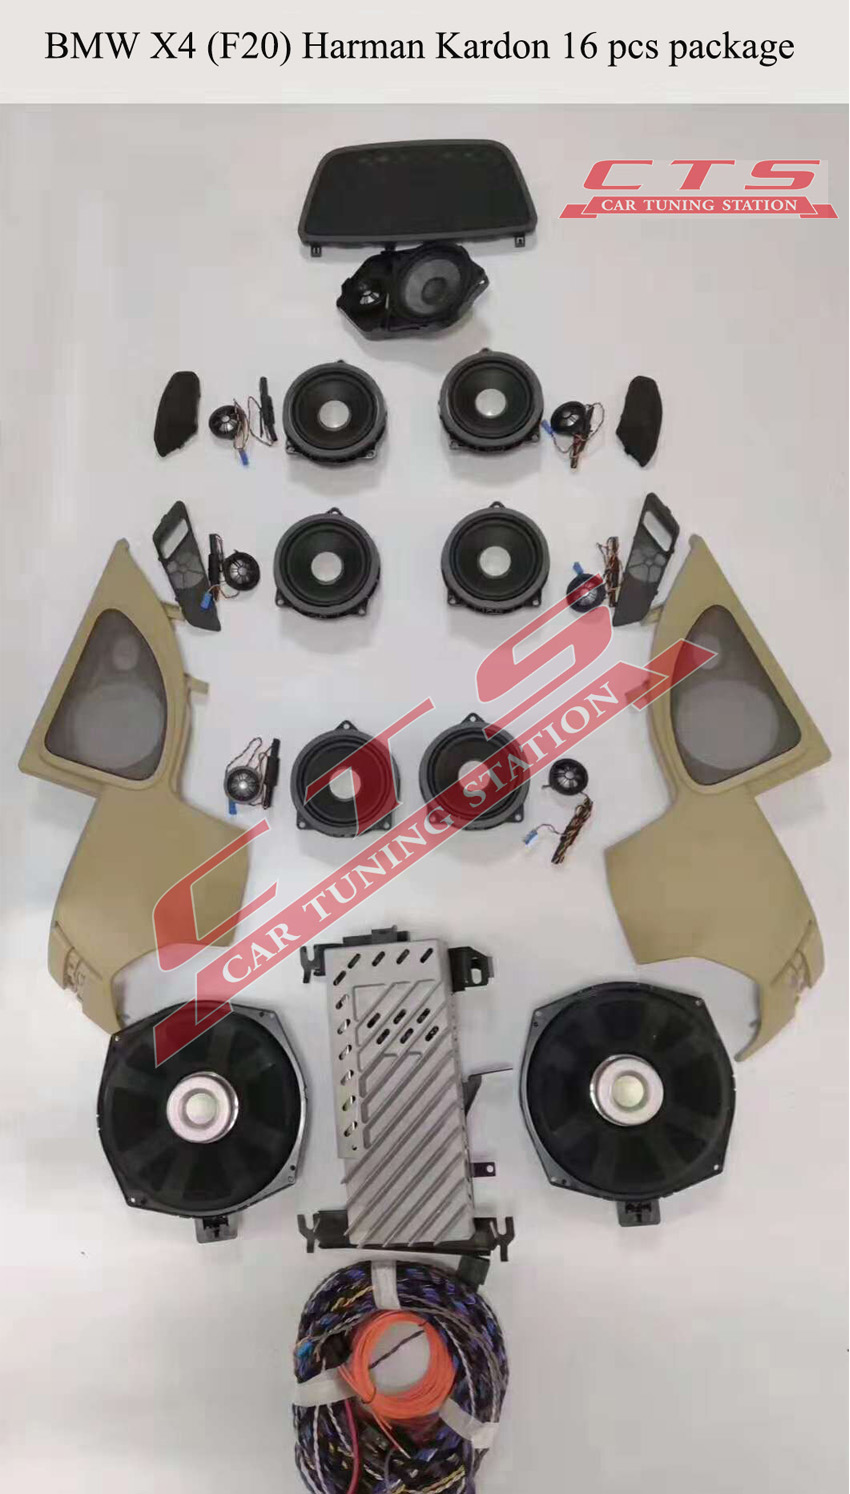 BMW F20 harman kardon audio system 